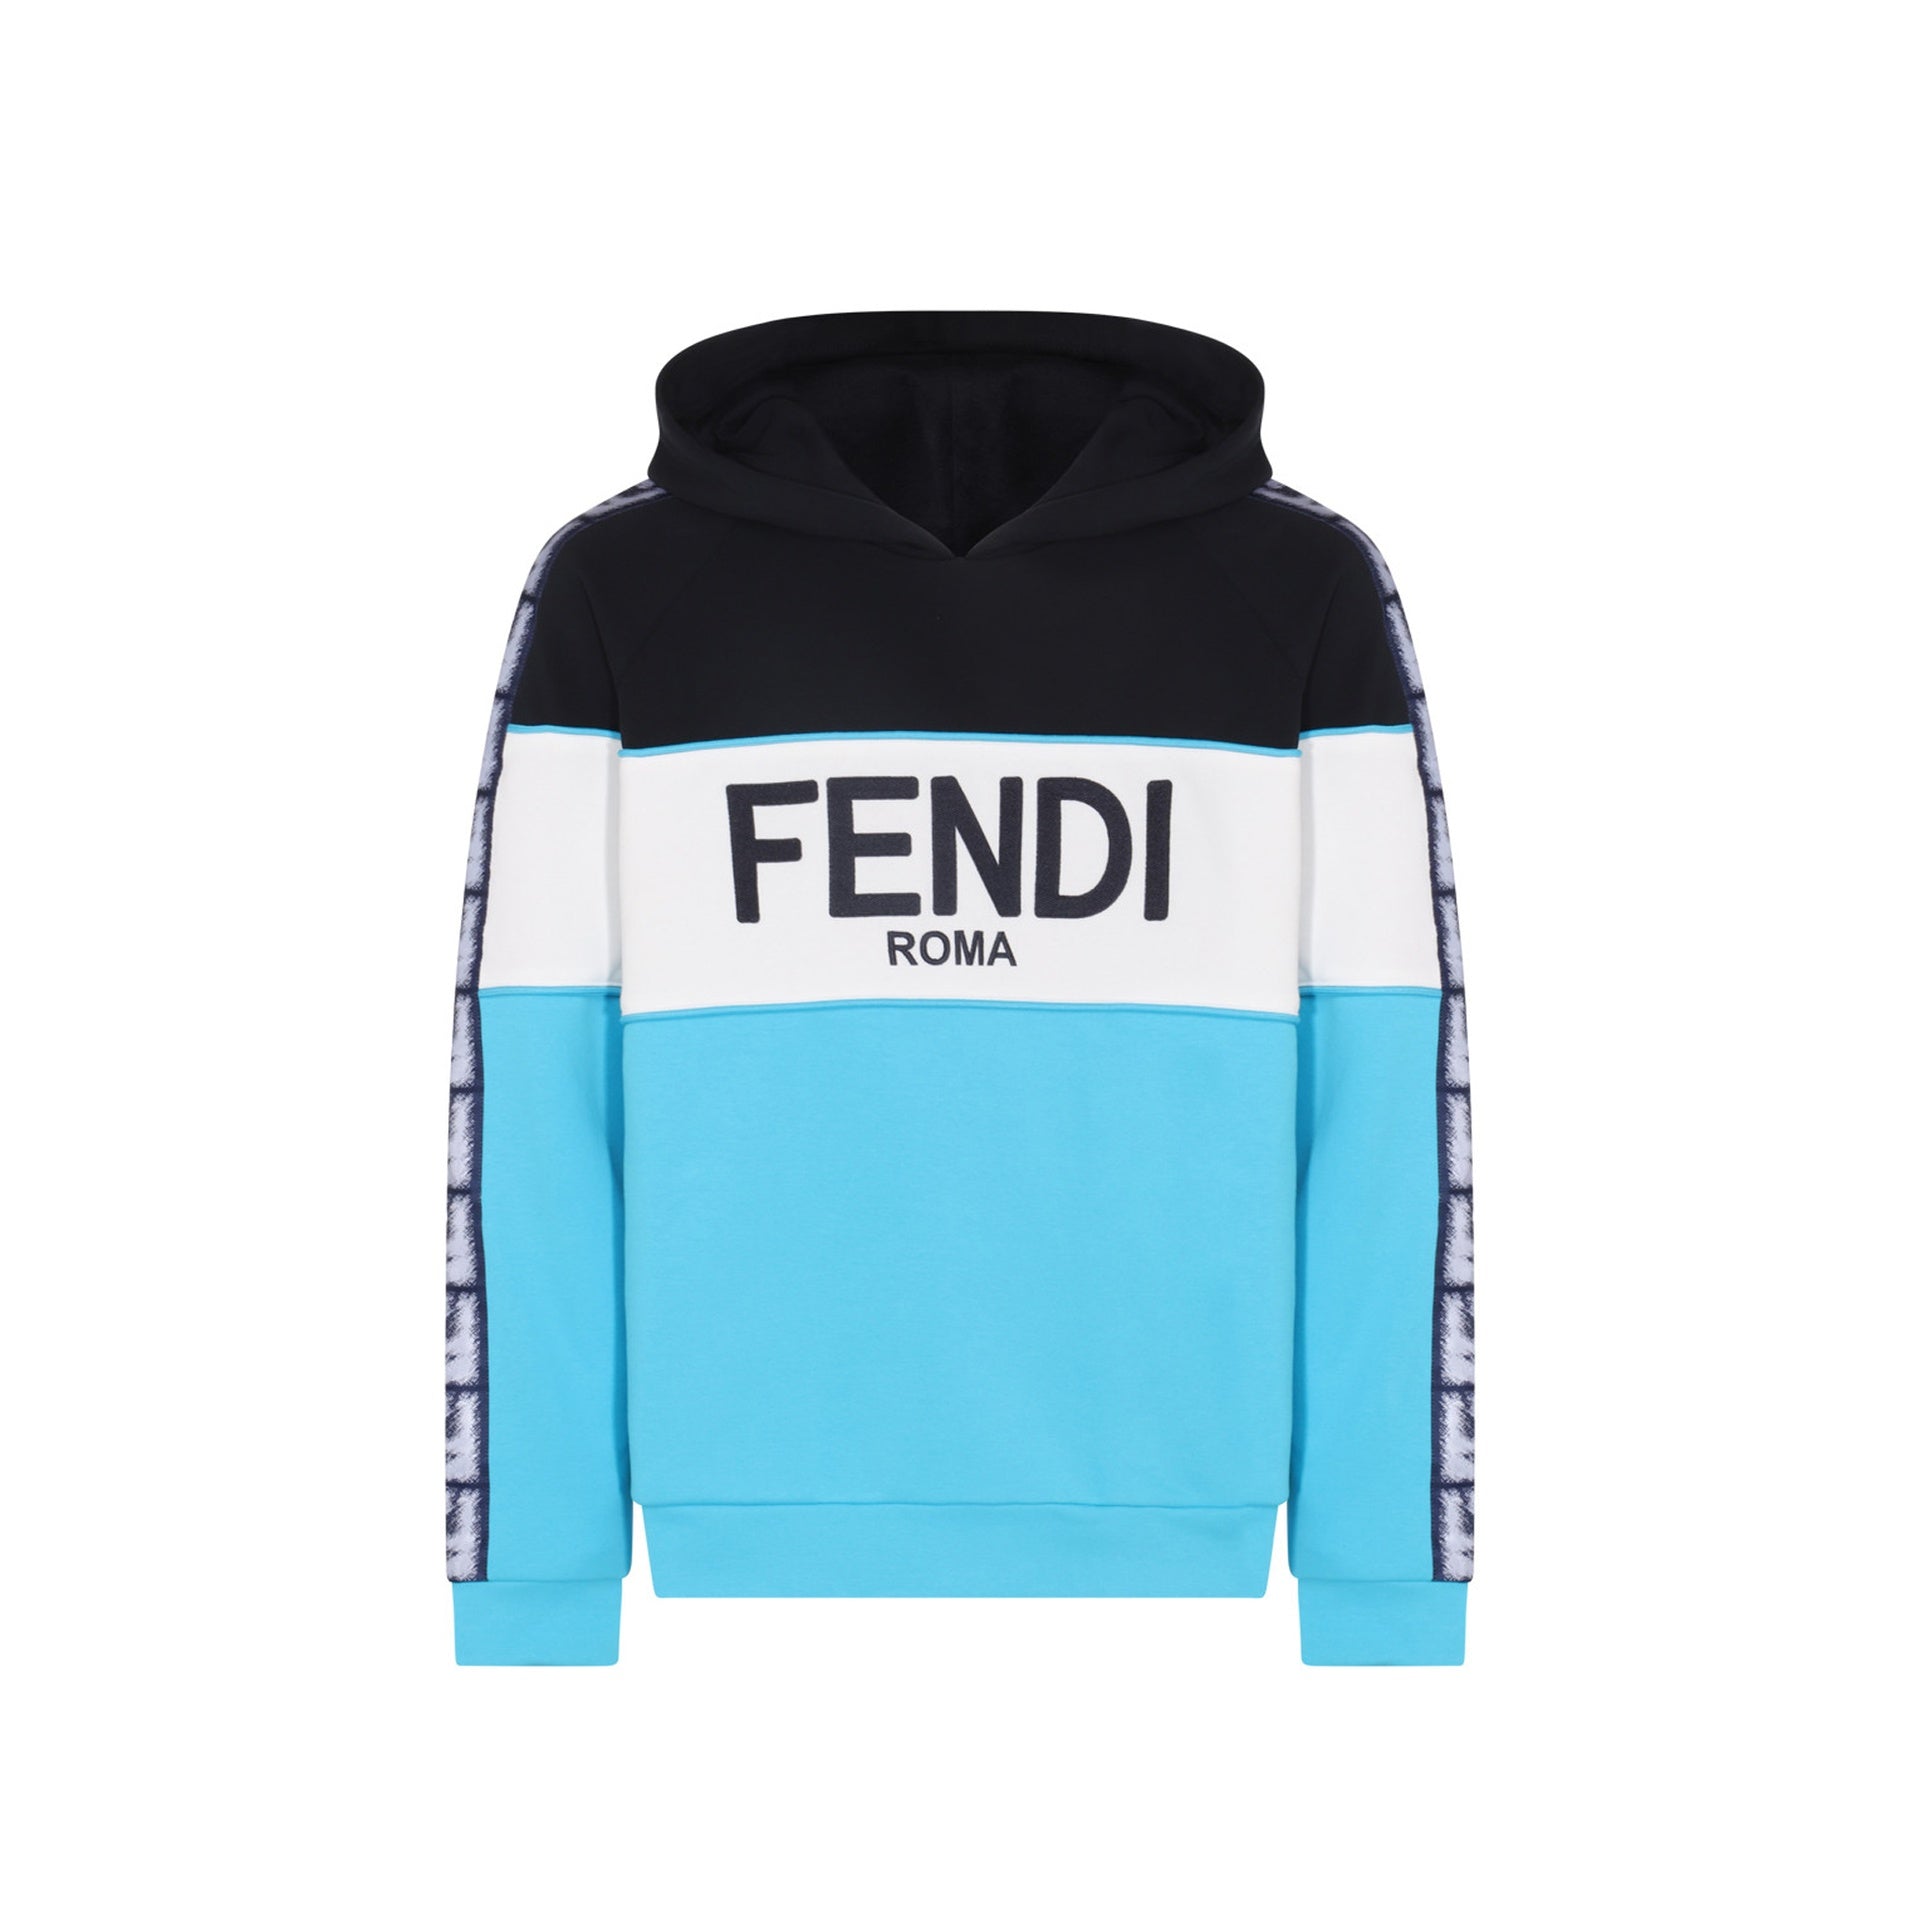 FENDI-OUTLET-SALE-FENDI-Logo-Hooded-Sweatshirt-Shirts-BLUE-L-ARCHIVE-COLLECTION.jpg